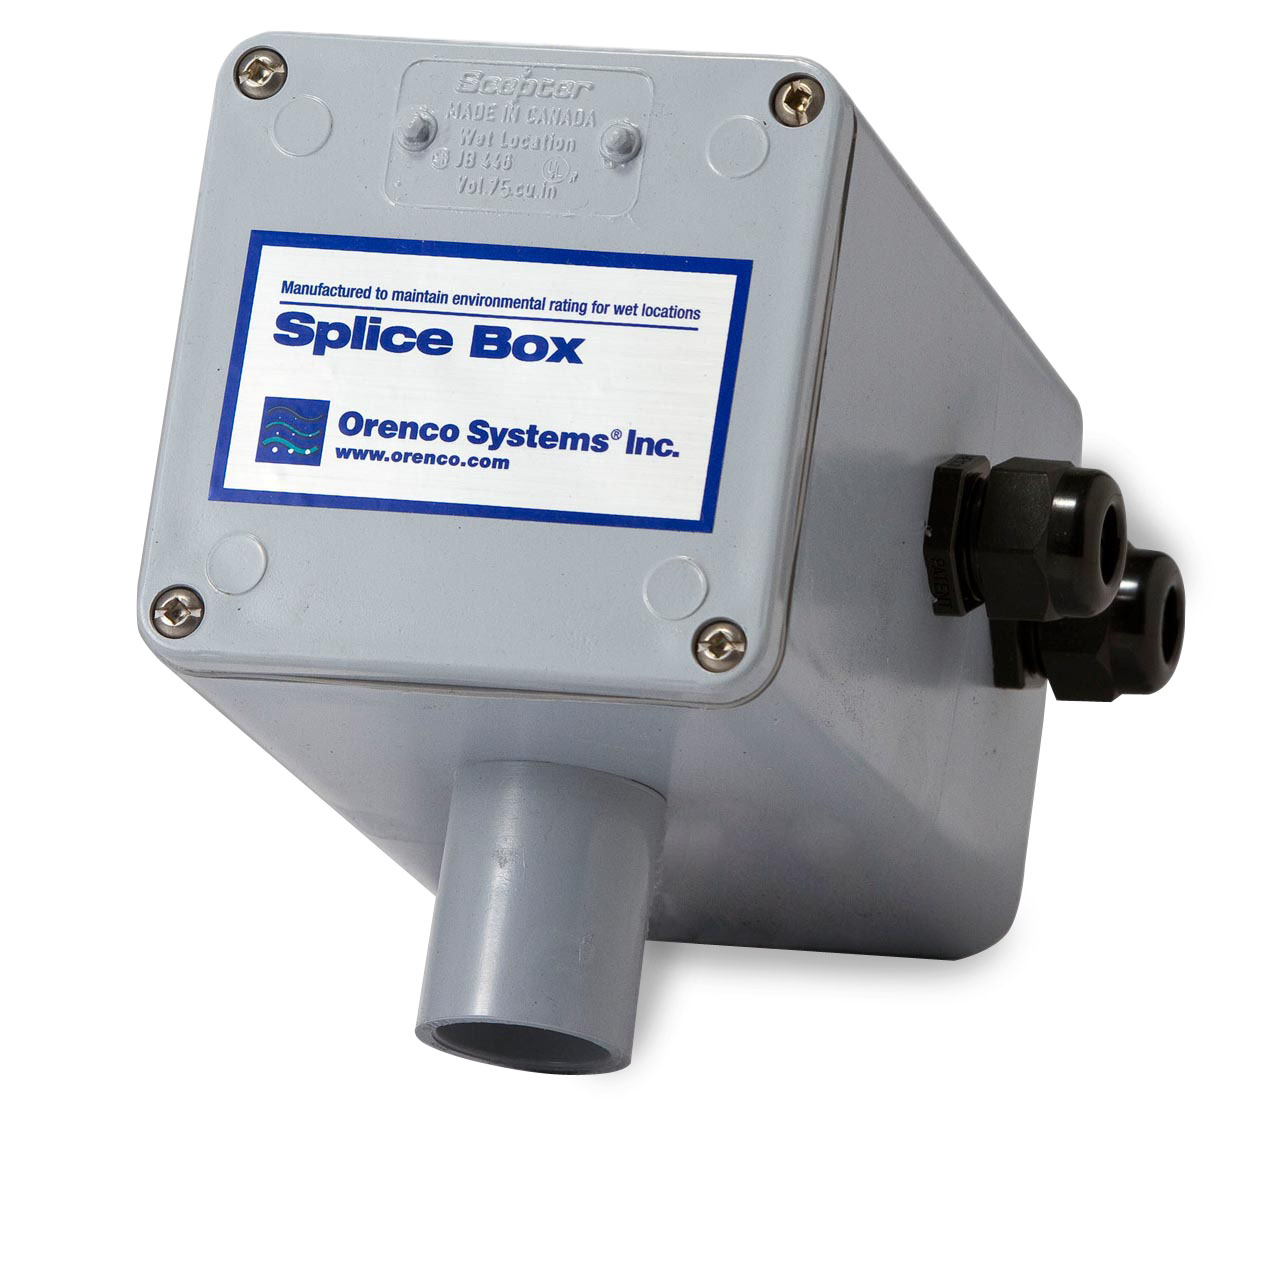 Hydromatic Pump - Hydromatic HPGH300M5-2 Sumbersible Sewage Grinder Pump  3.0 HP 575V 3PH Manual 4.25 imp. 35' cord #HTC514661047